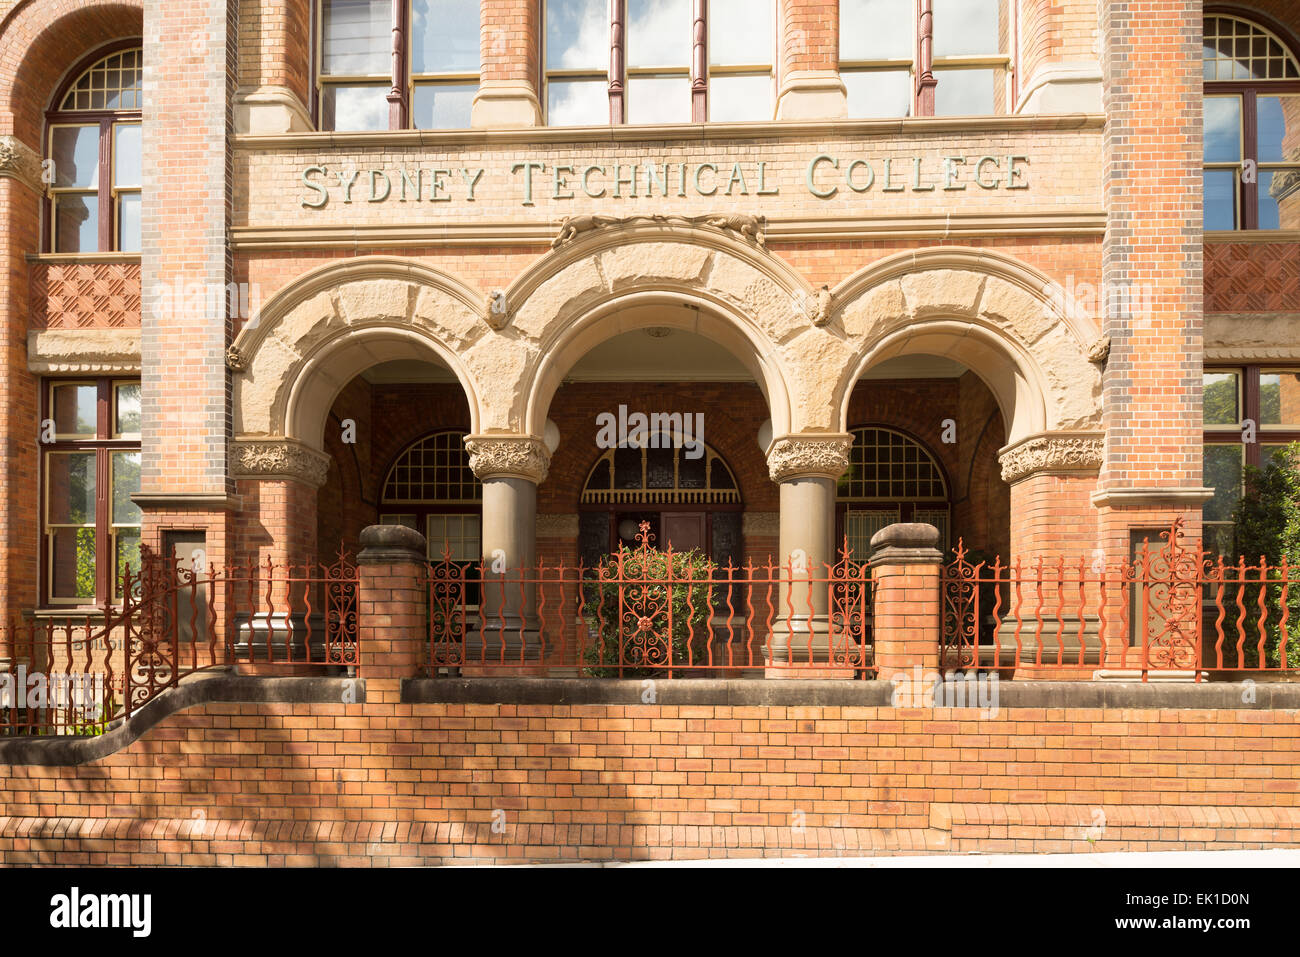 Sydney Technical College. Stock Photo